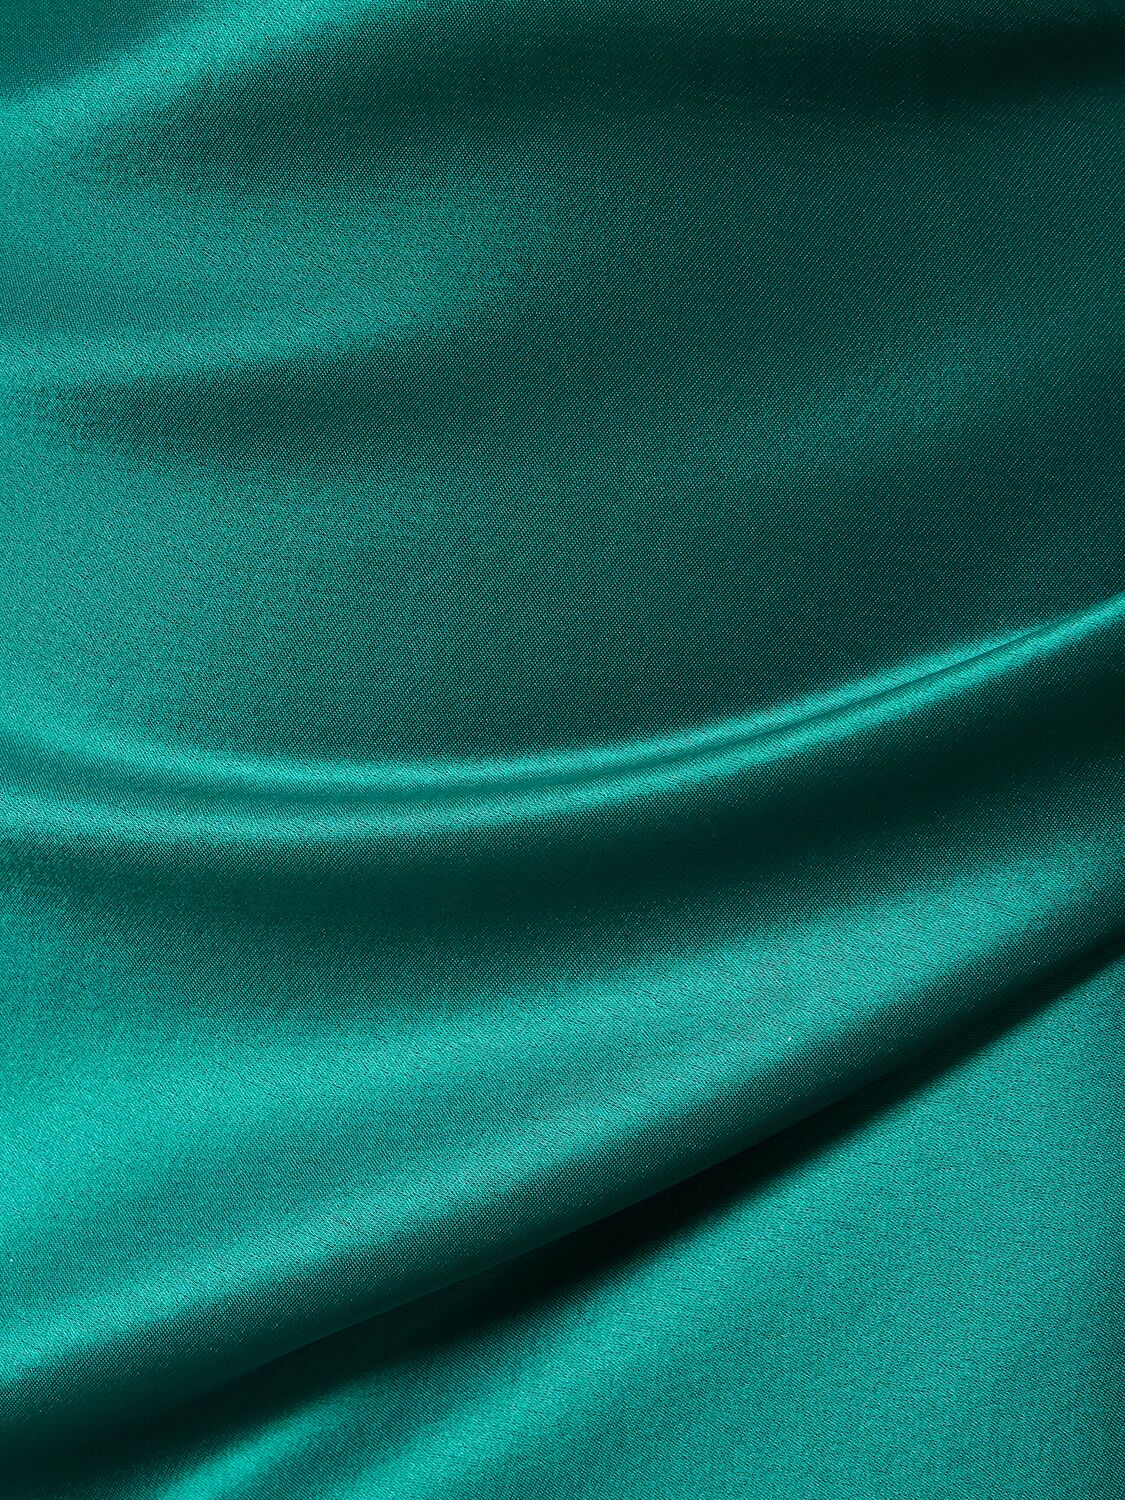 Shop Galvan Evelyn Cross Neck Satin Long Dress In Emerald